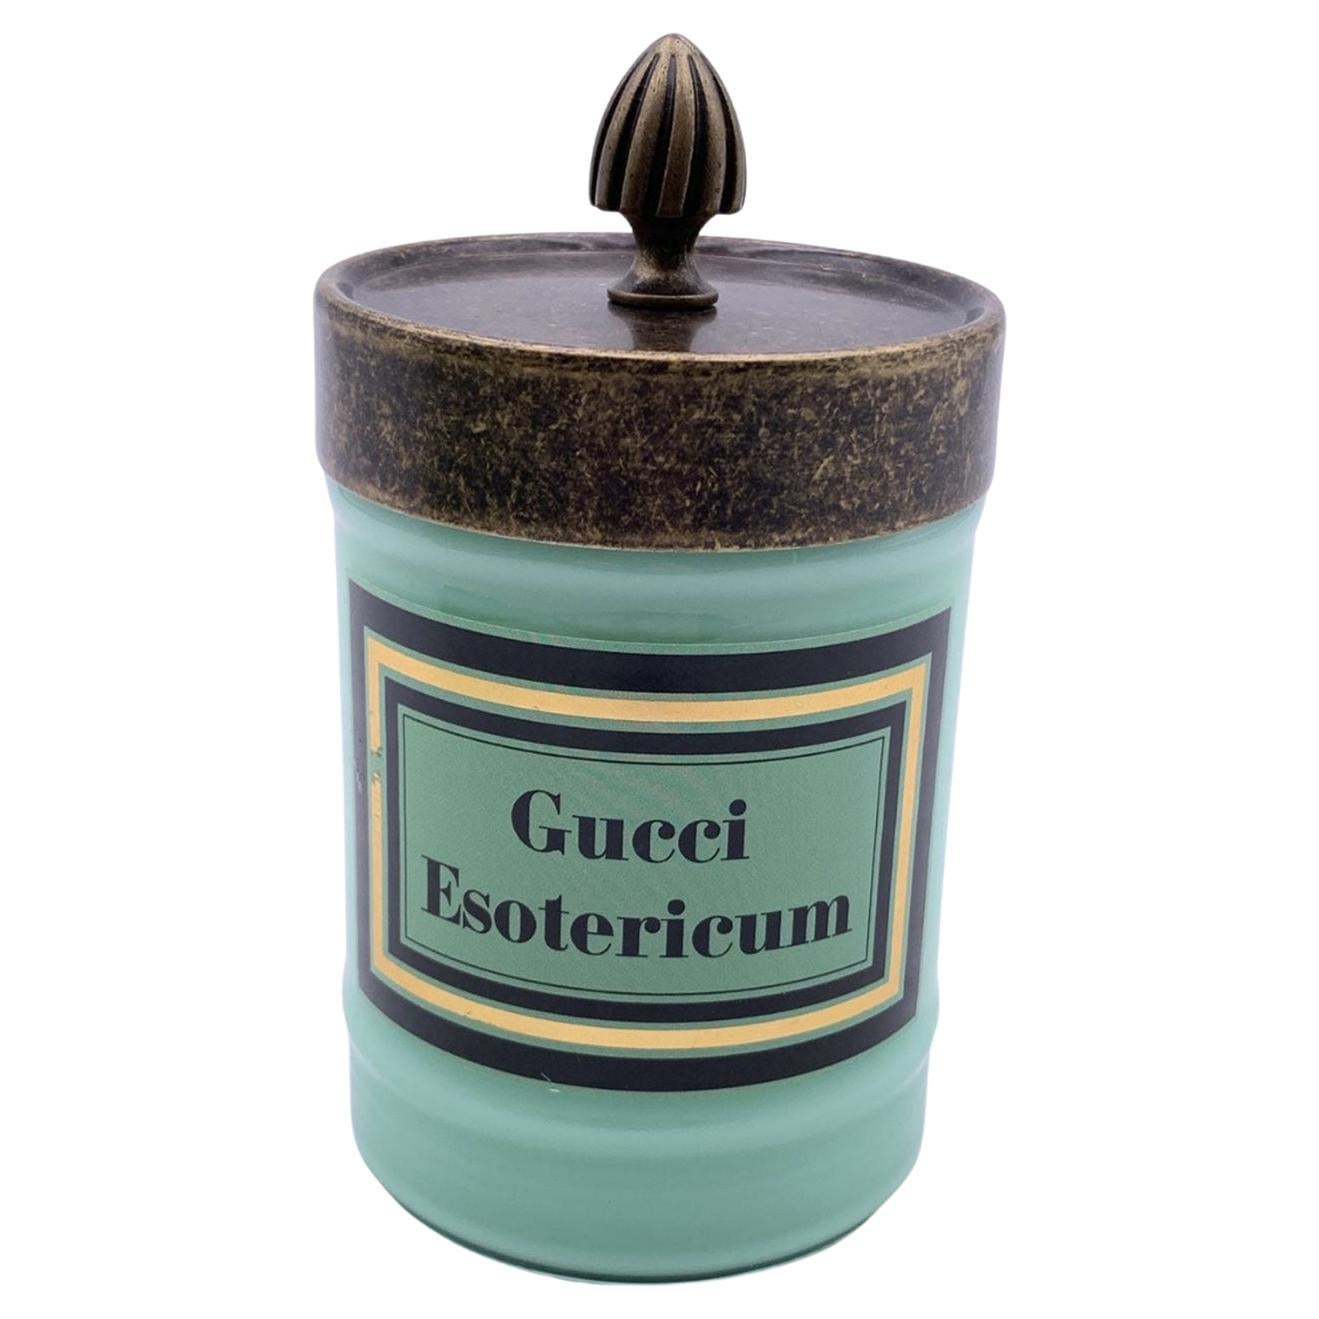 Gucci Esotericum Duftkerze Aqua Grün Murano Glas JAR im Angebot